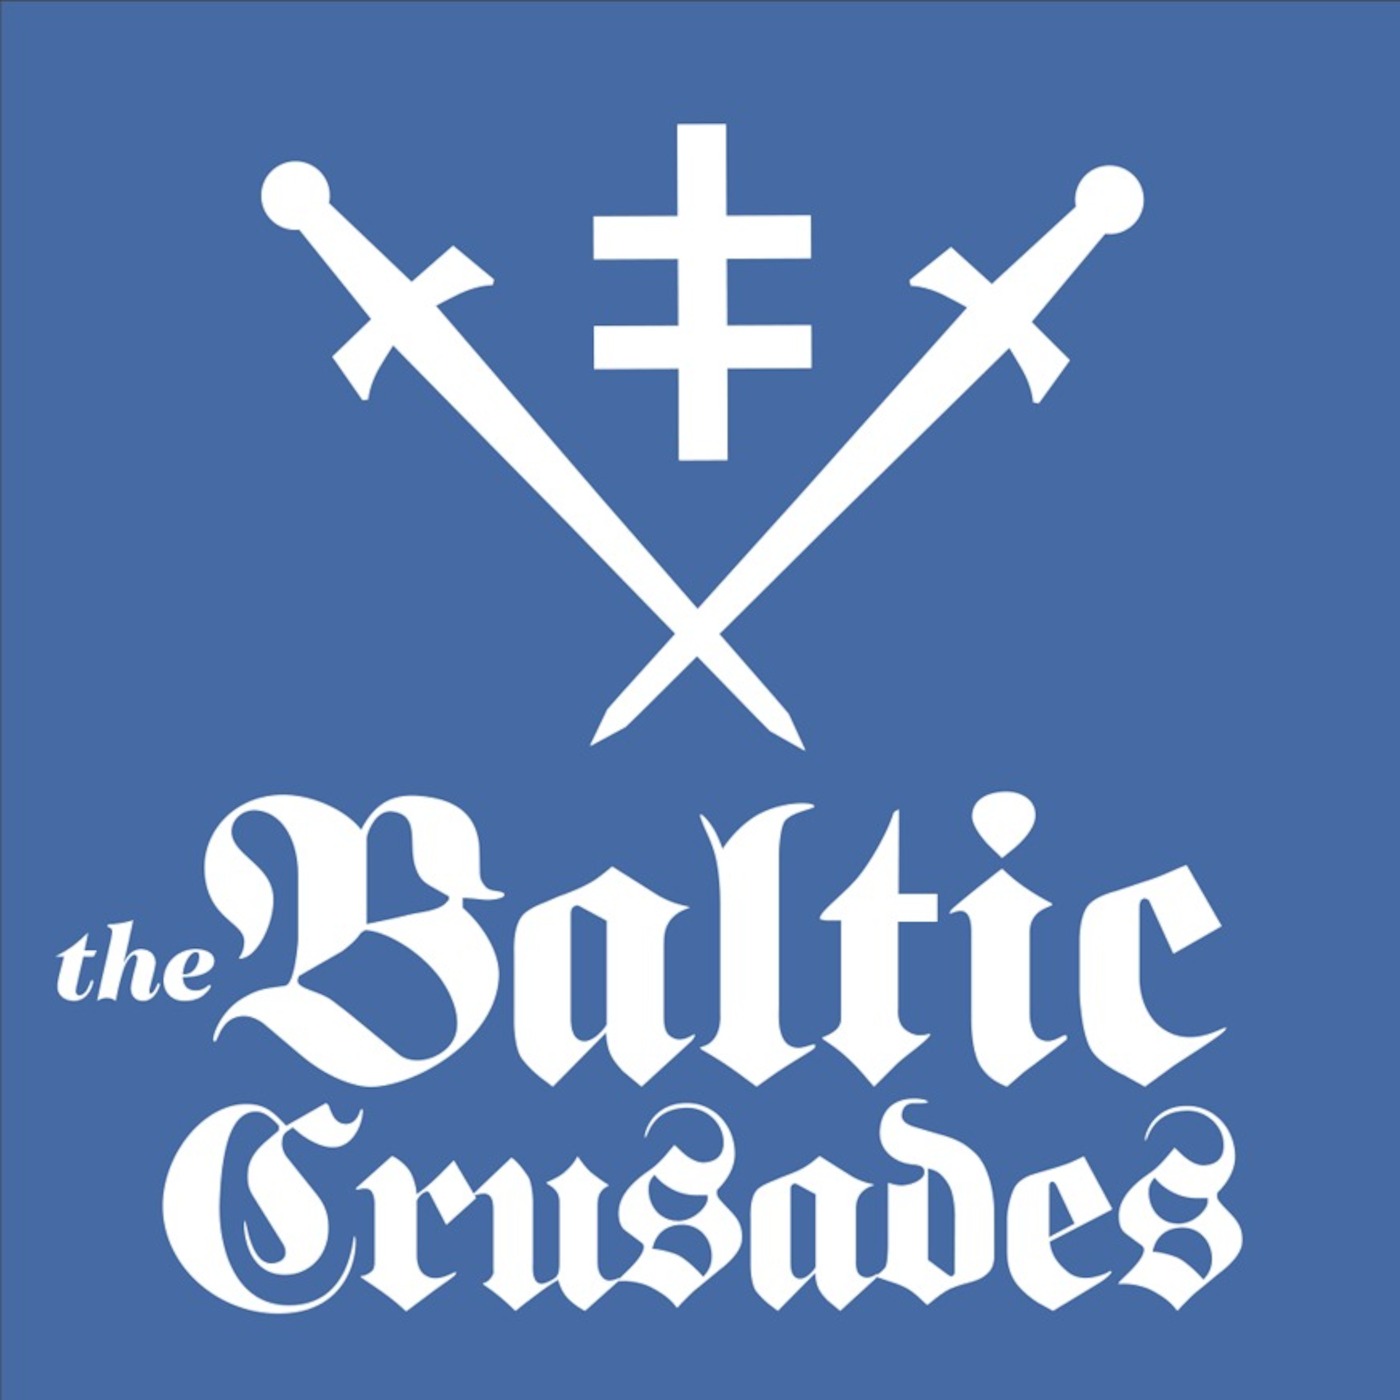 Episode 236 - The Baltic Crusades